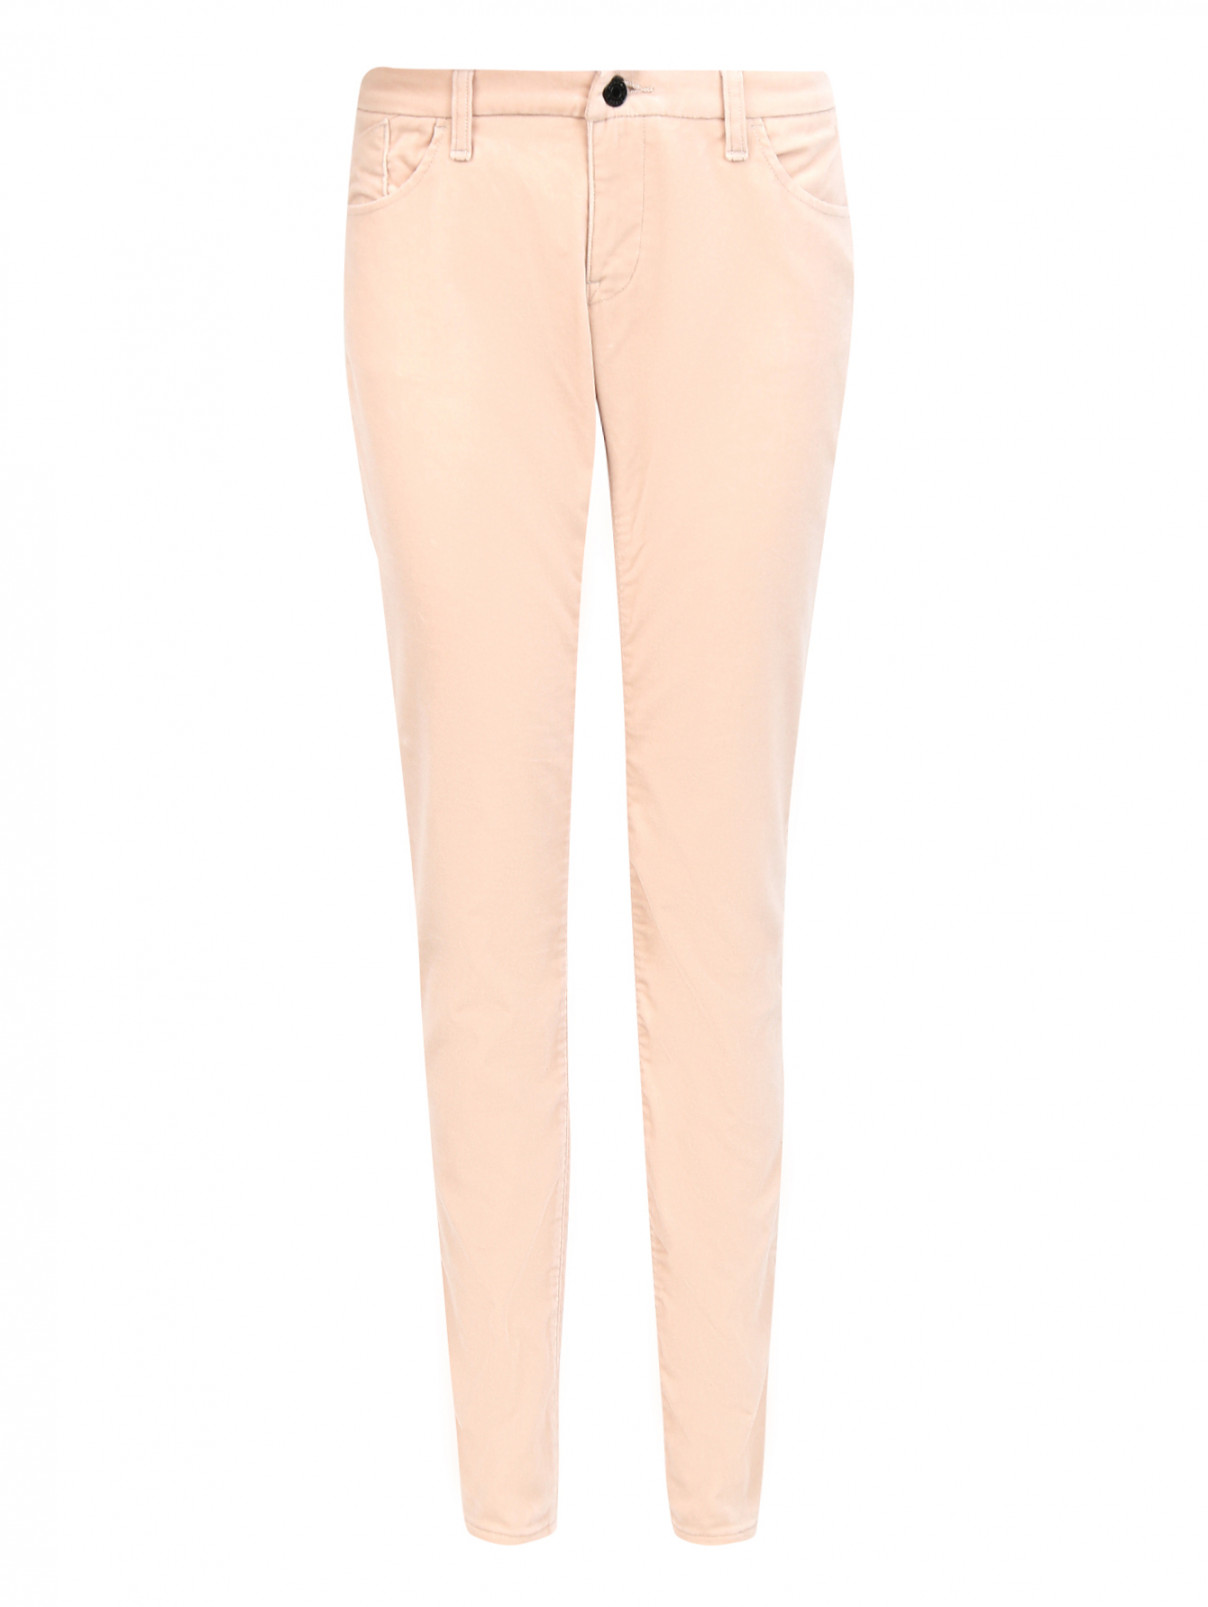 Брюки-деним прямого кроя Armani Jeans  –  Общий вид  – Цвет:  Розовый